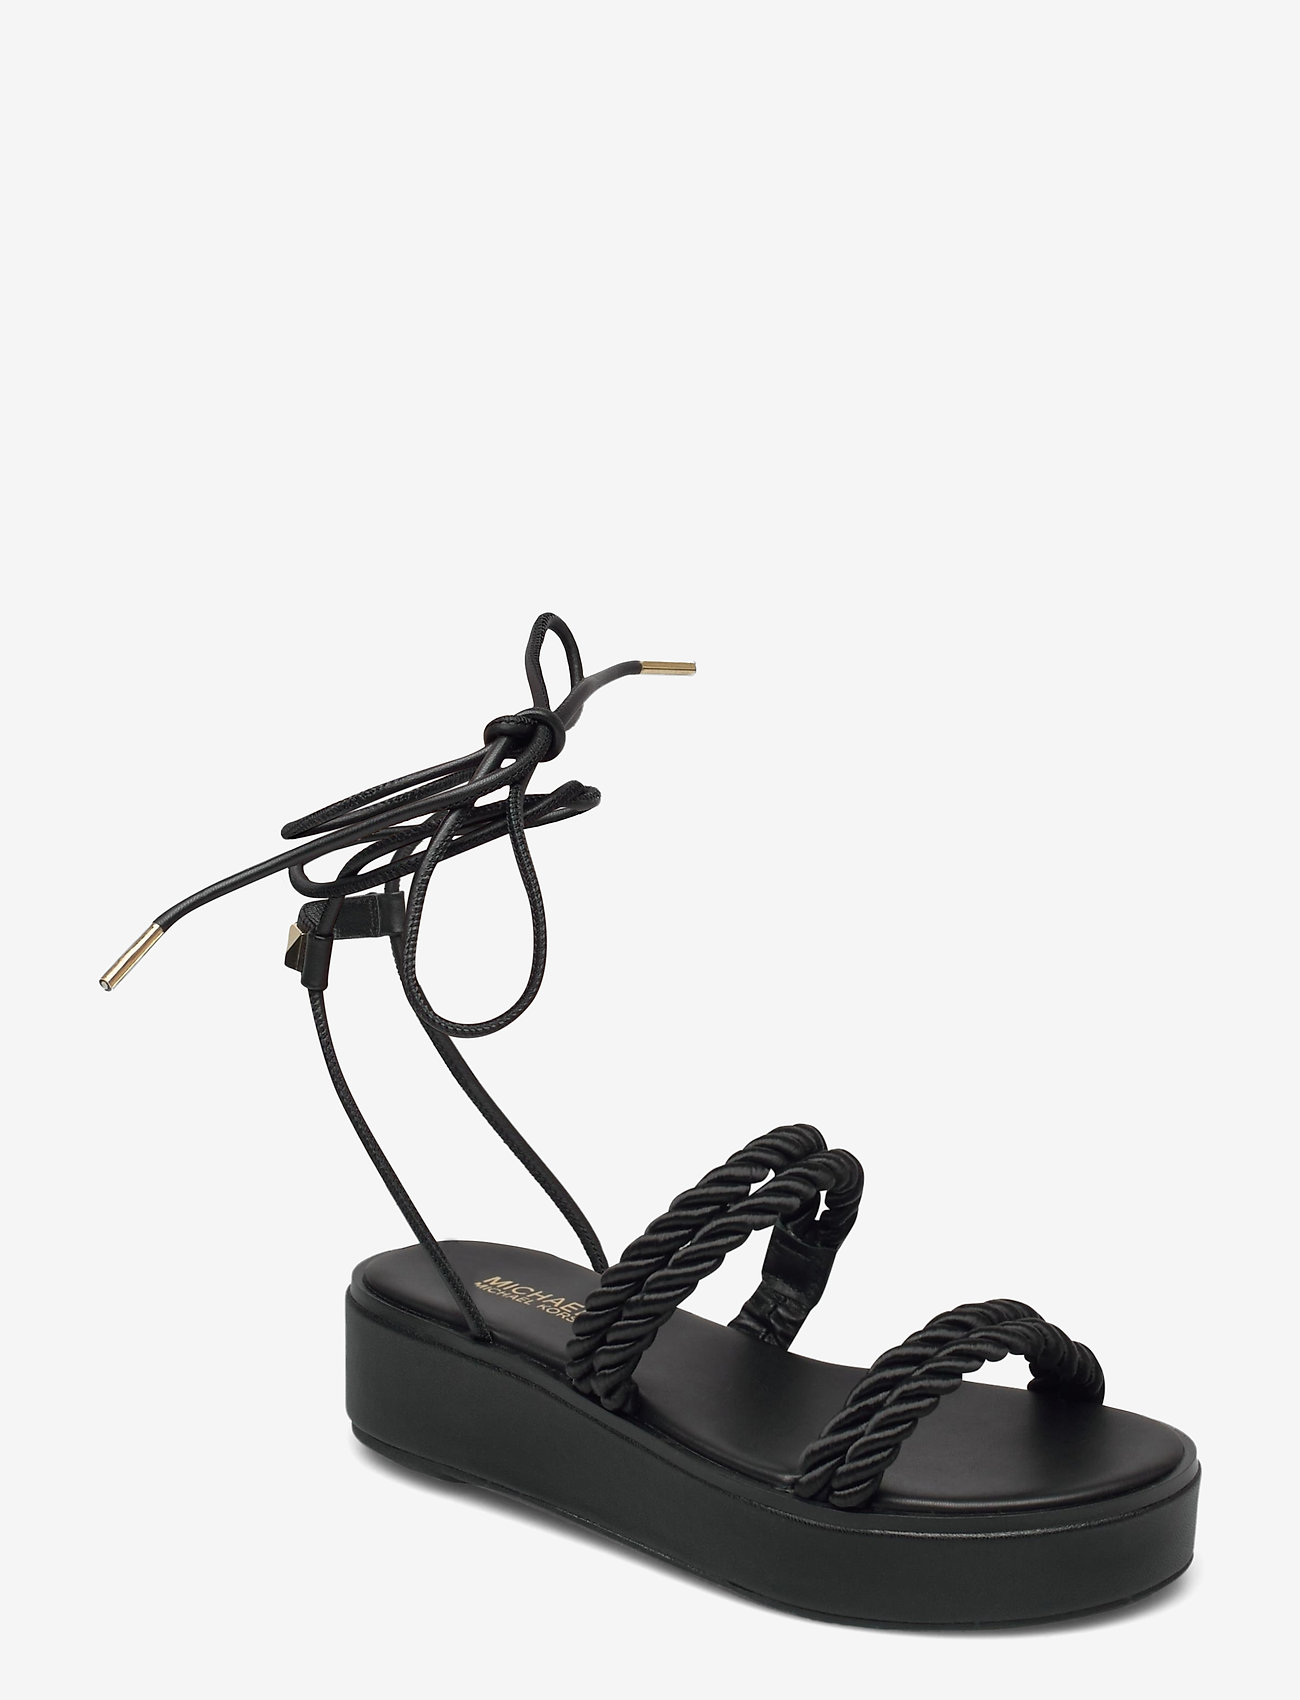 Michael Kors Marina Sandal - Flat sandals | Boozt.com